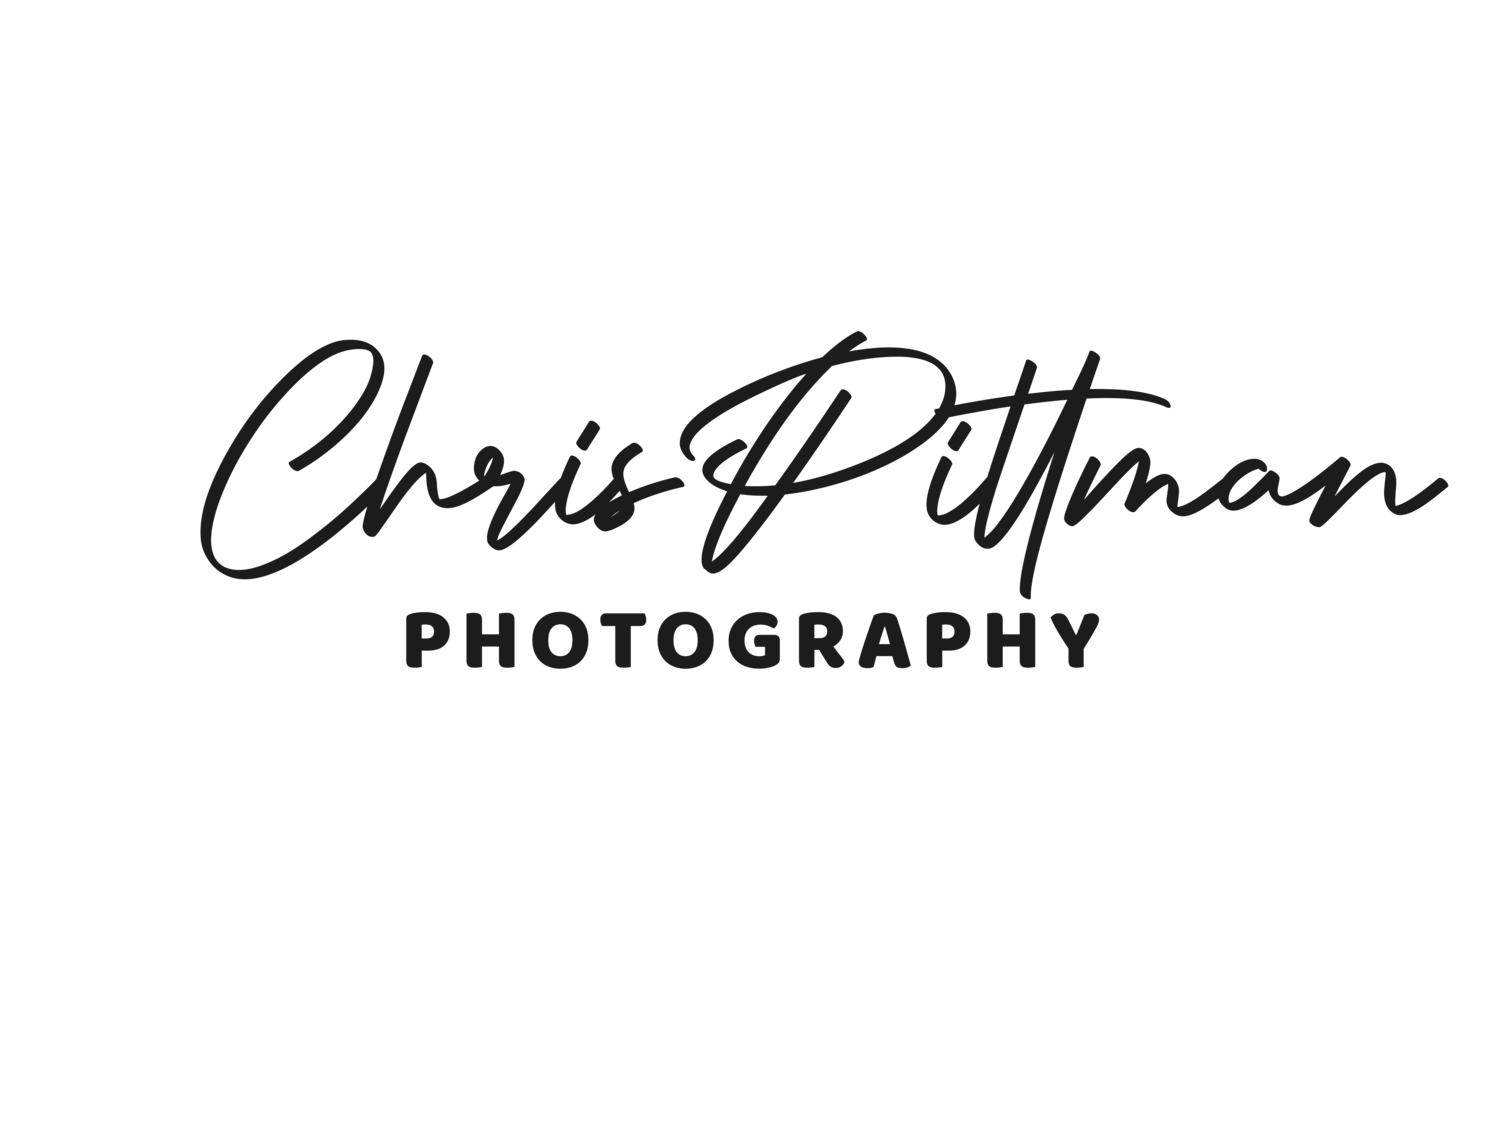 Chris Pittman Photography